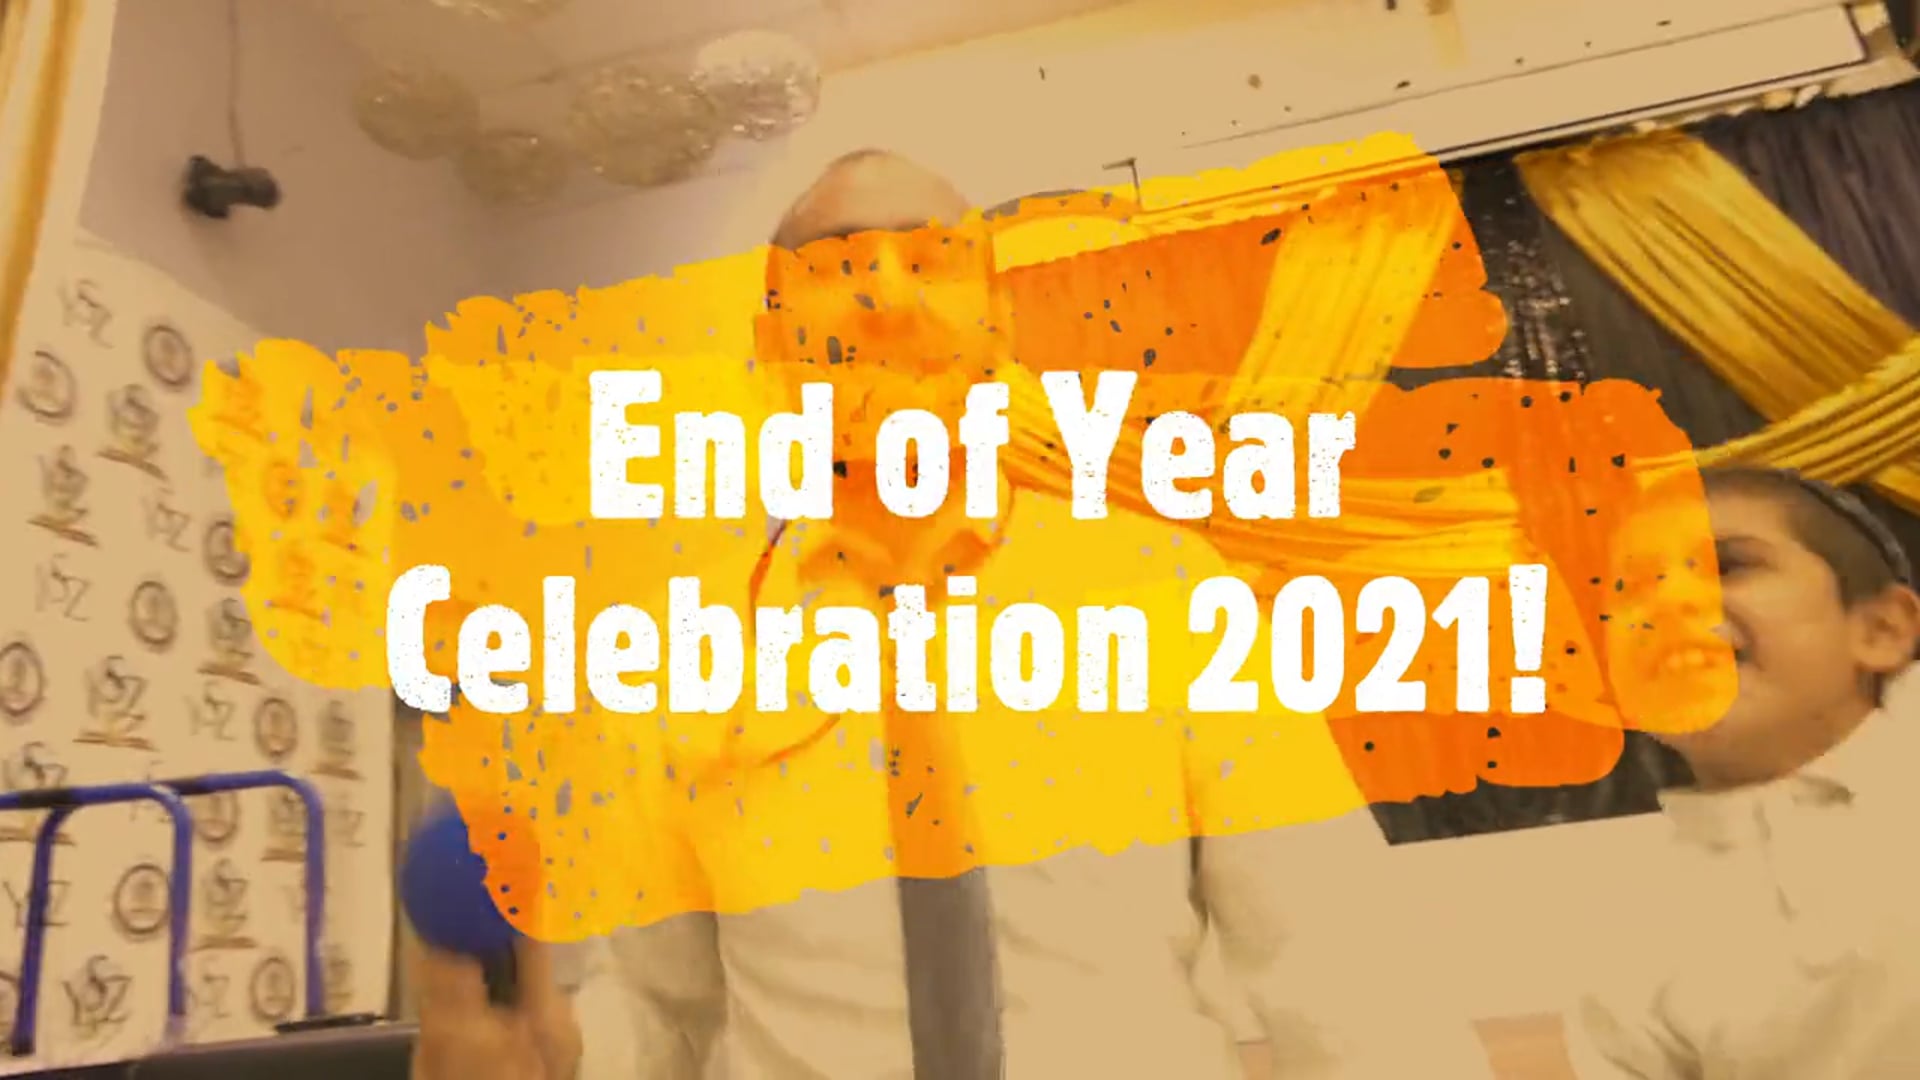 End of Year Celebration 2021!